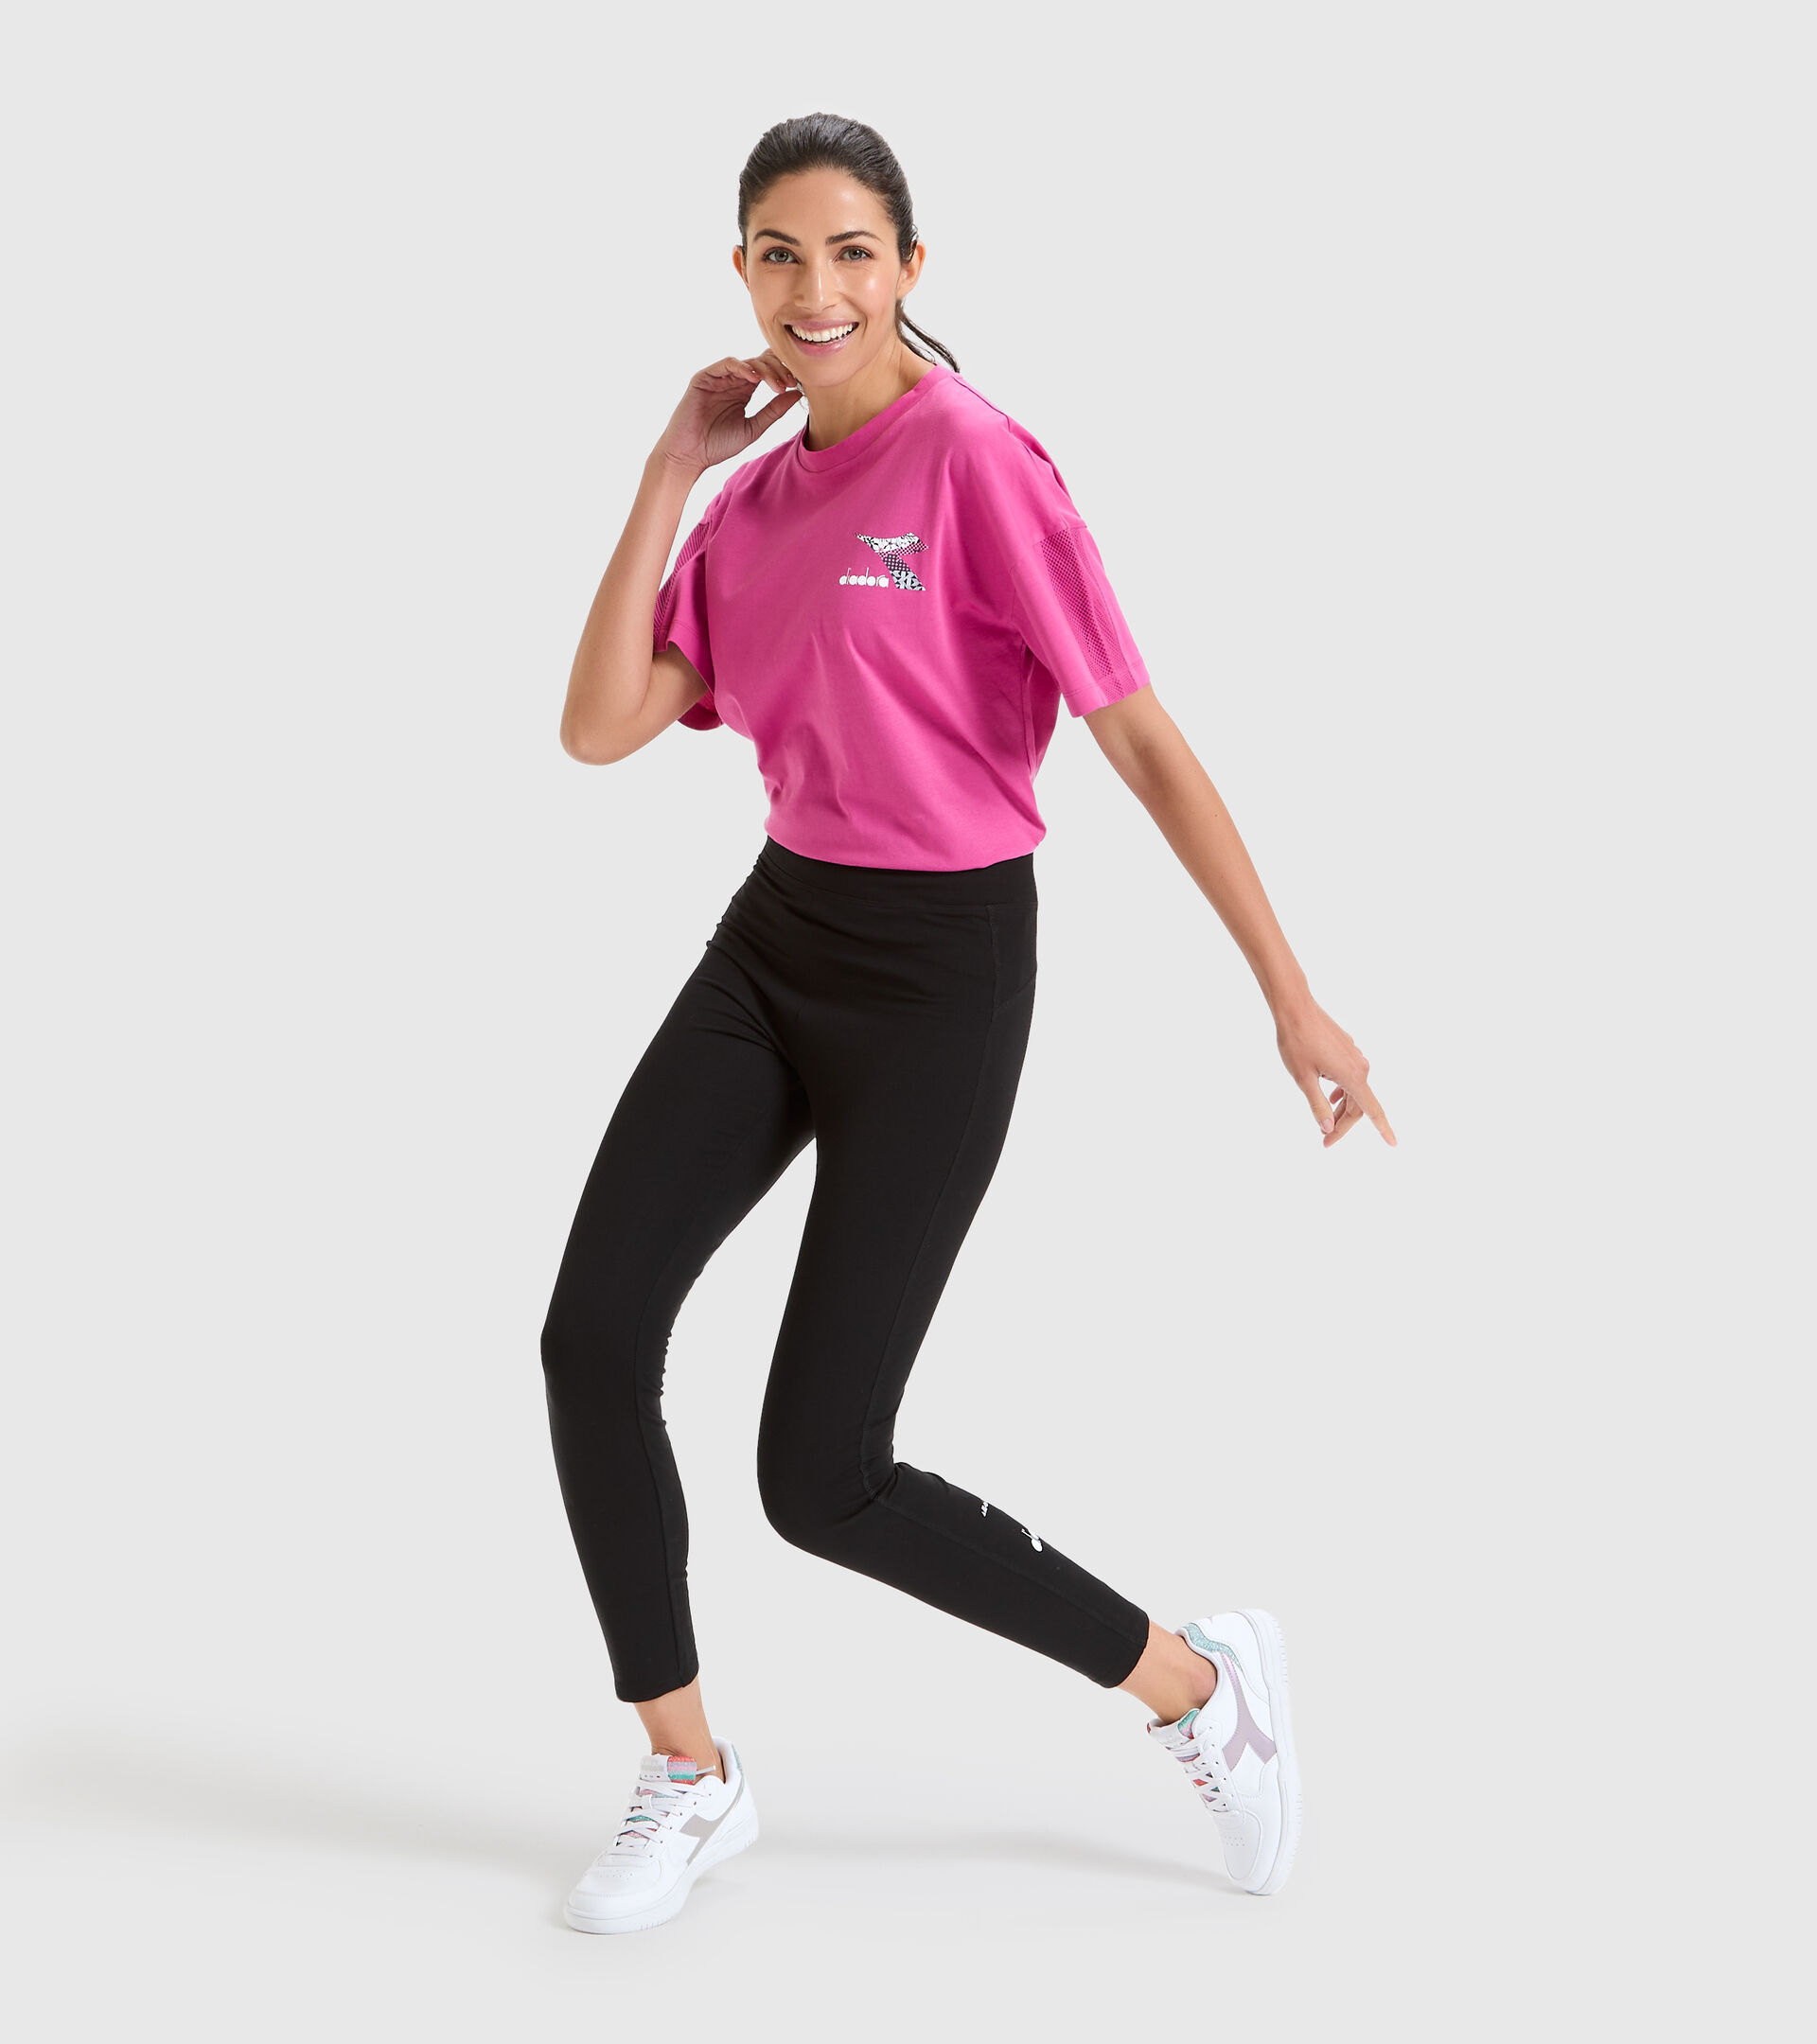 Sports leggings - Women L.LEGGINGS FLOSS BLACK - Diadora